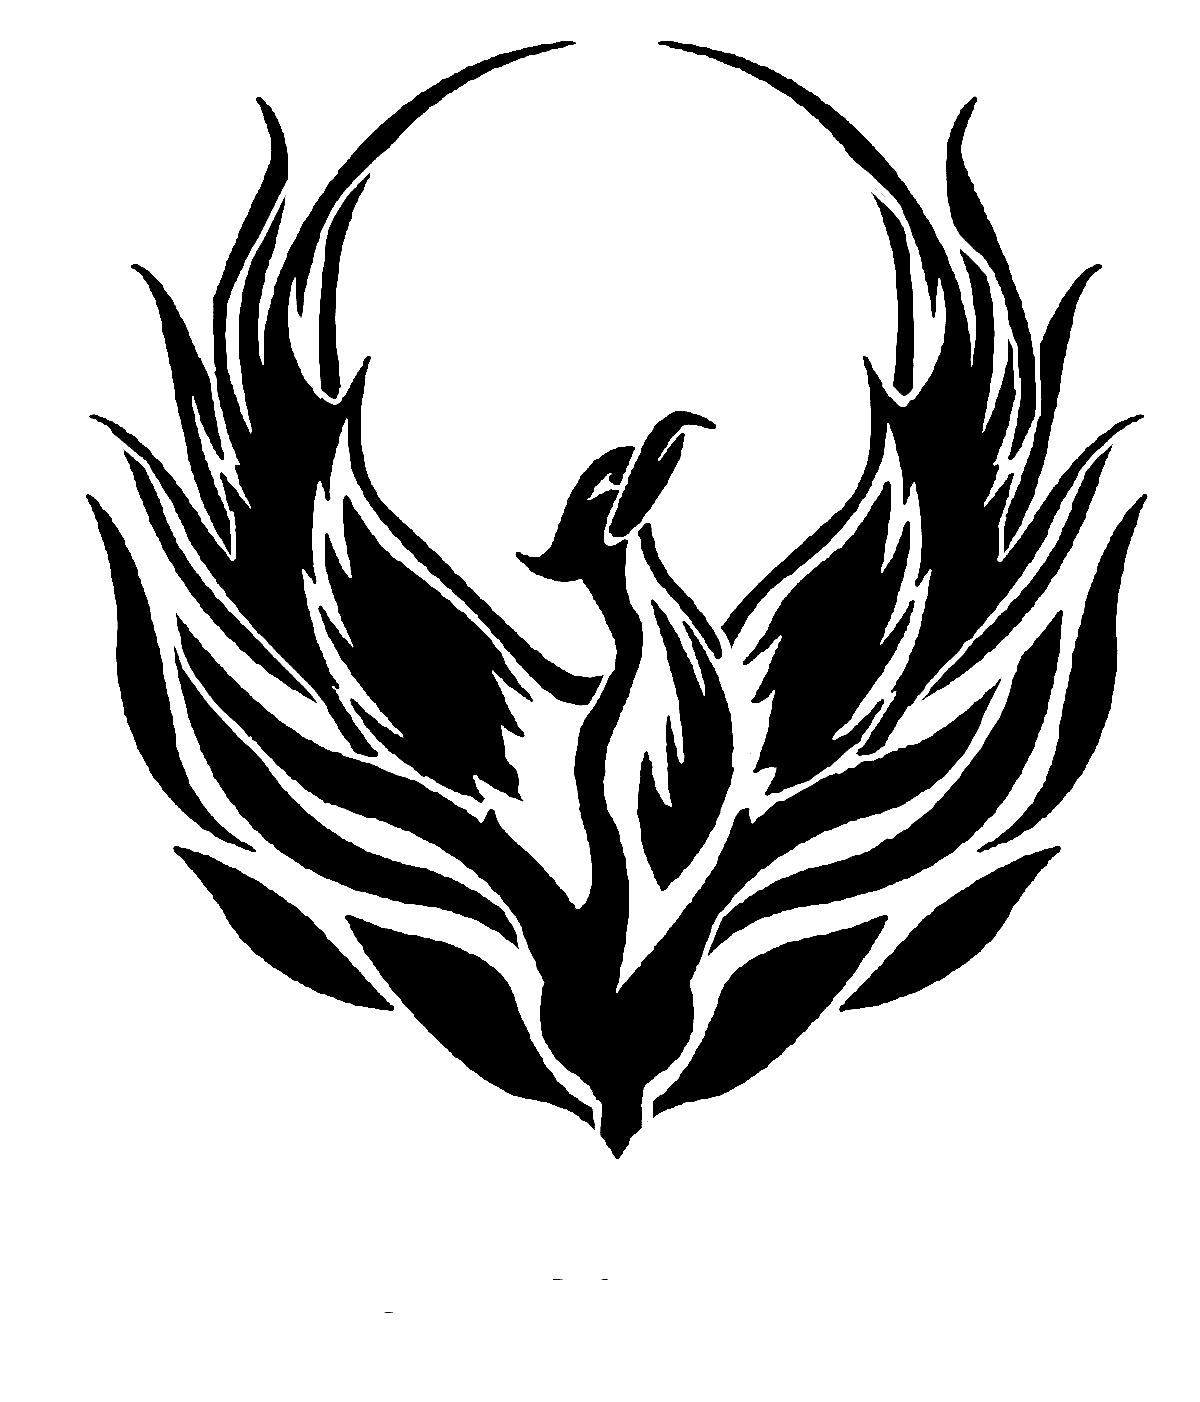 Phoenix Bird Drawing Logo - Phoenix Rising From the Ashes | Phoenix- rises from the ashes ...